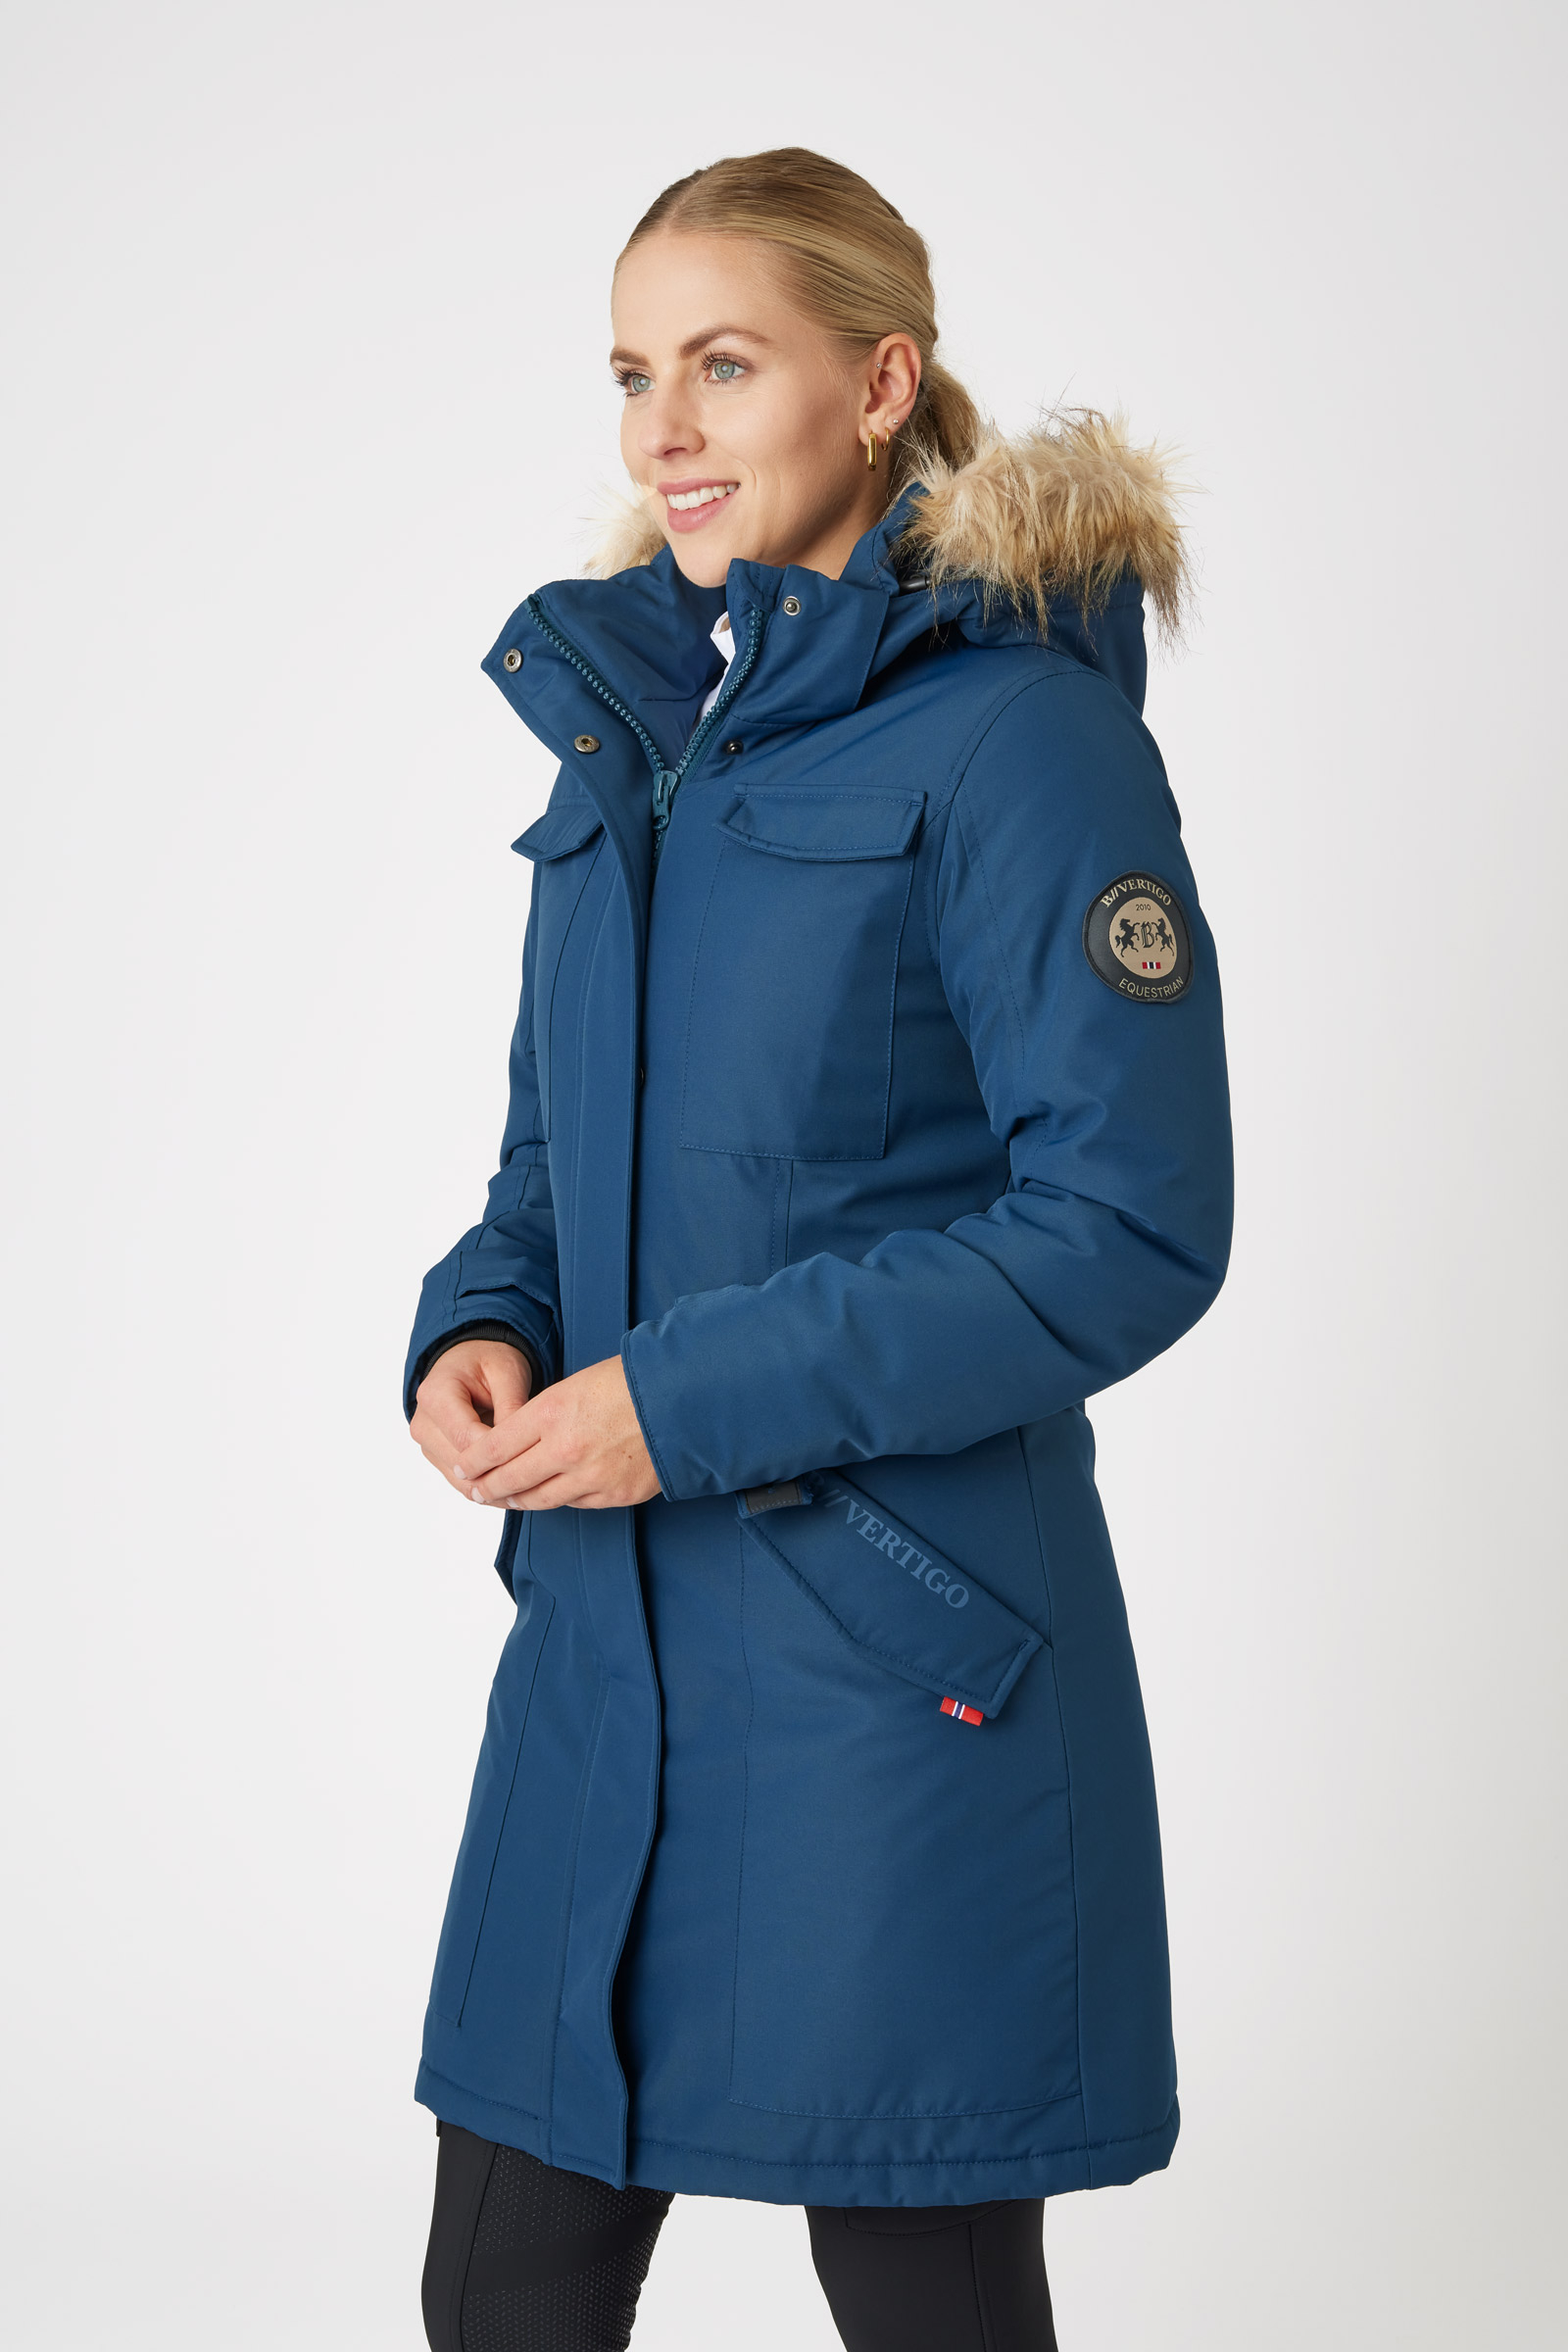 Jackets For Women - Get Upto 40% Off on Winter Jacket & Fleece